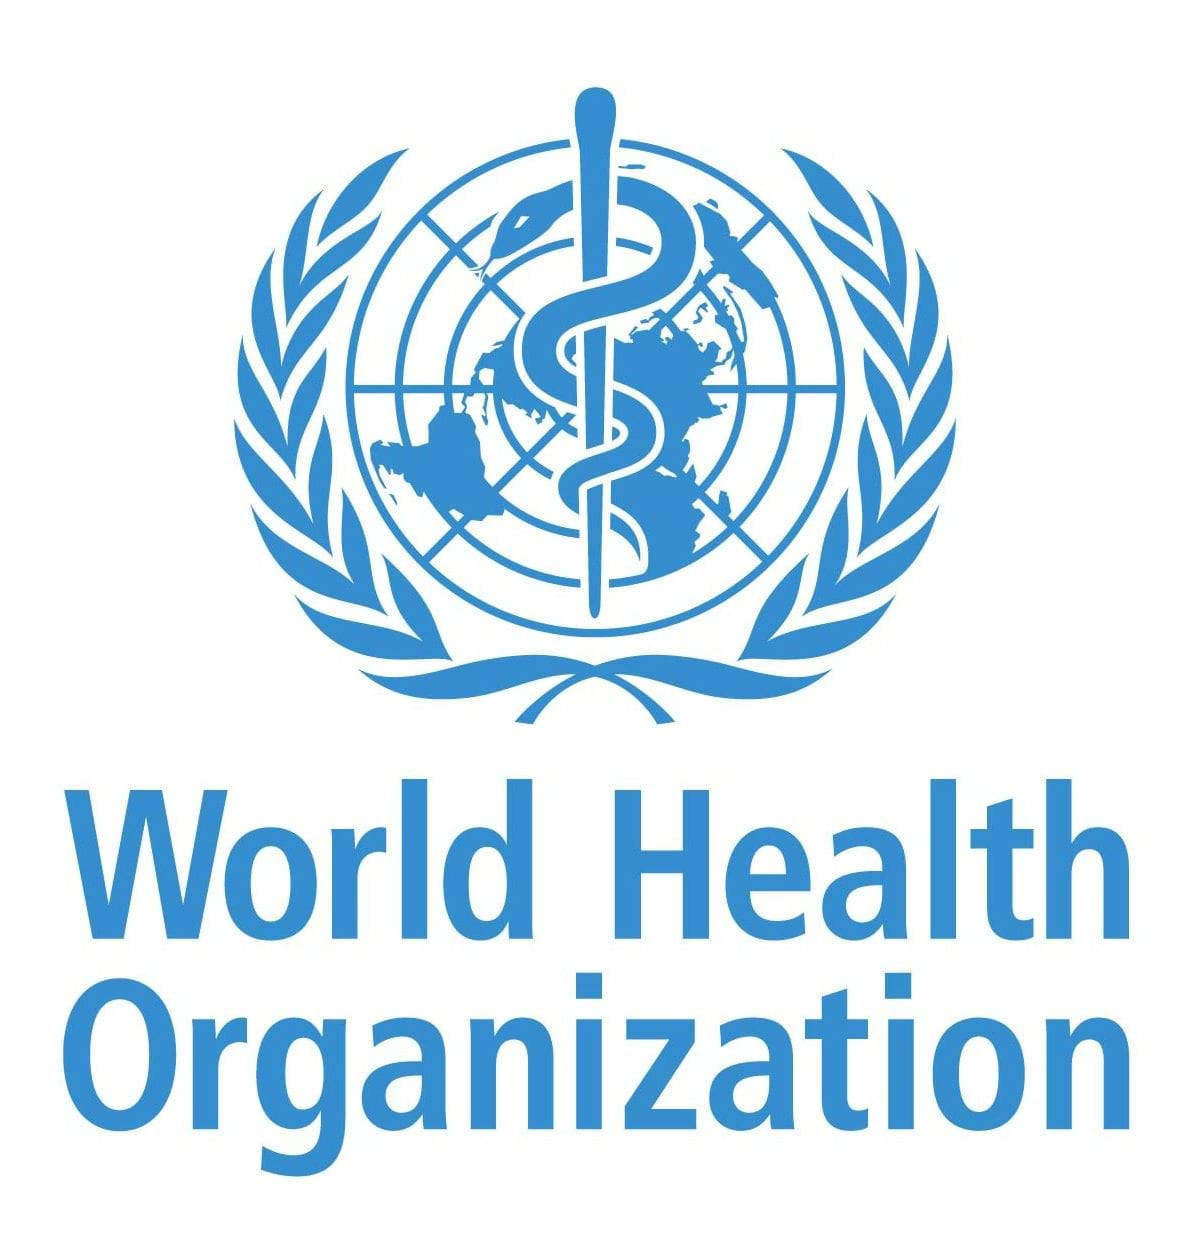 World Health Organization: Water, sanitation and hygiene (WASH) cover